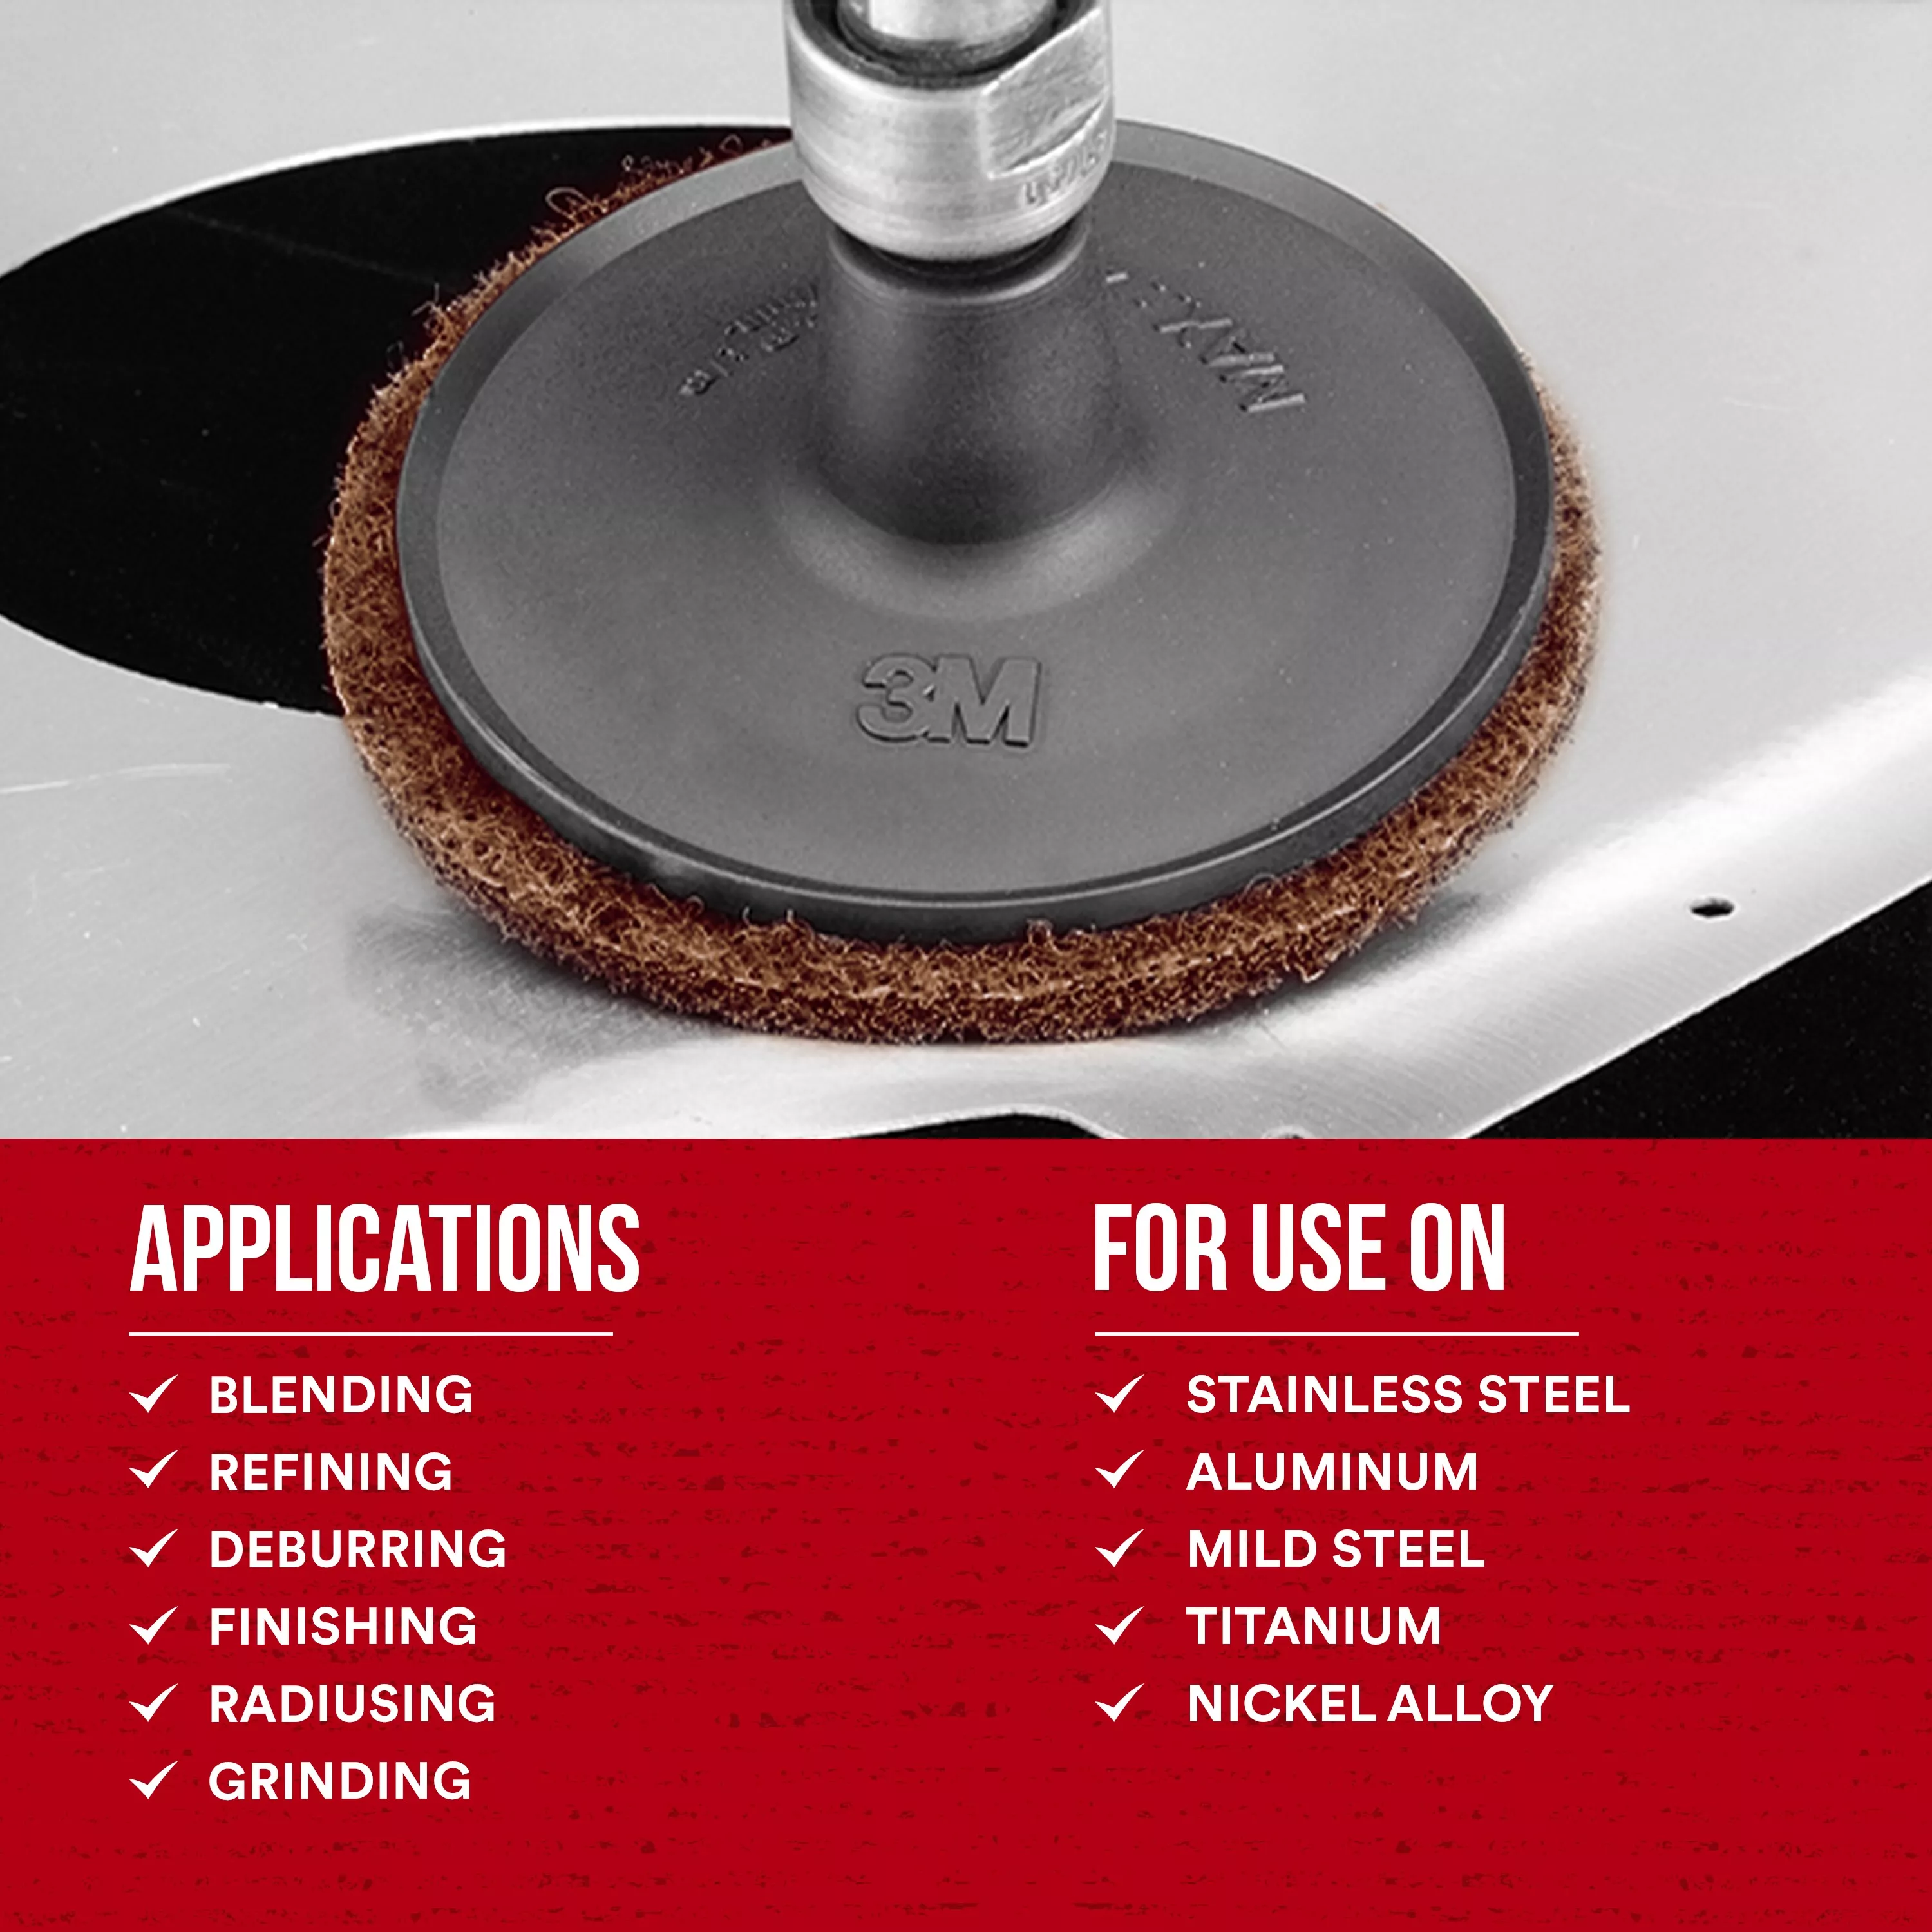 SKU 7010329293 | Scotch-Brite™ Roloc™ SL Surface Conditioning Disc